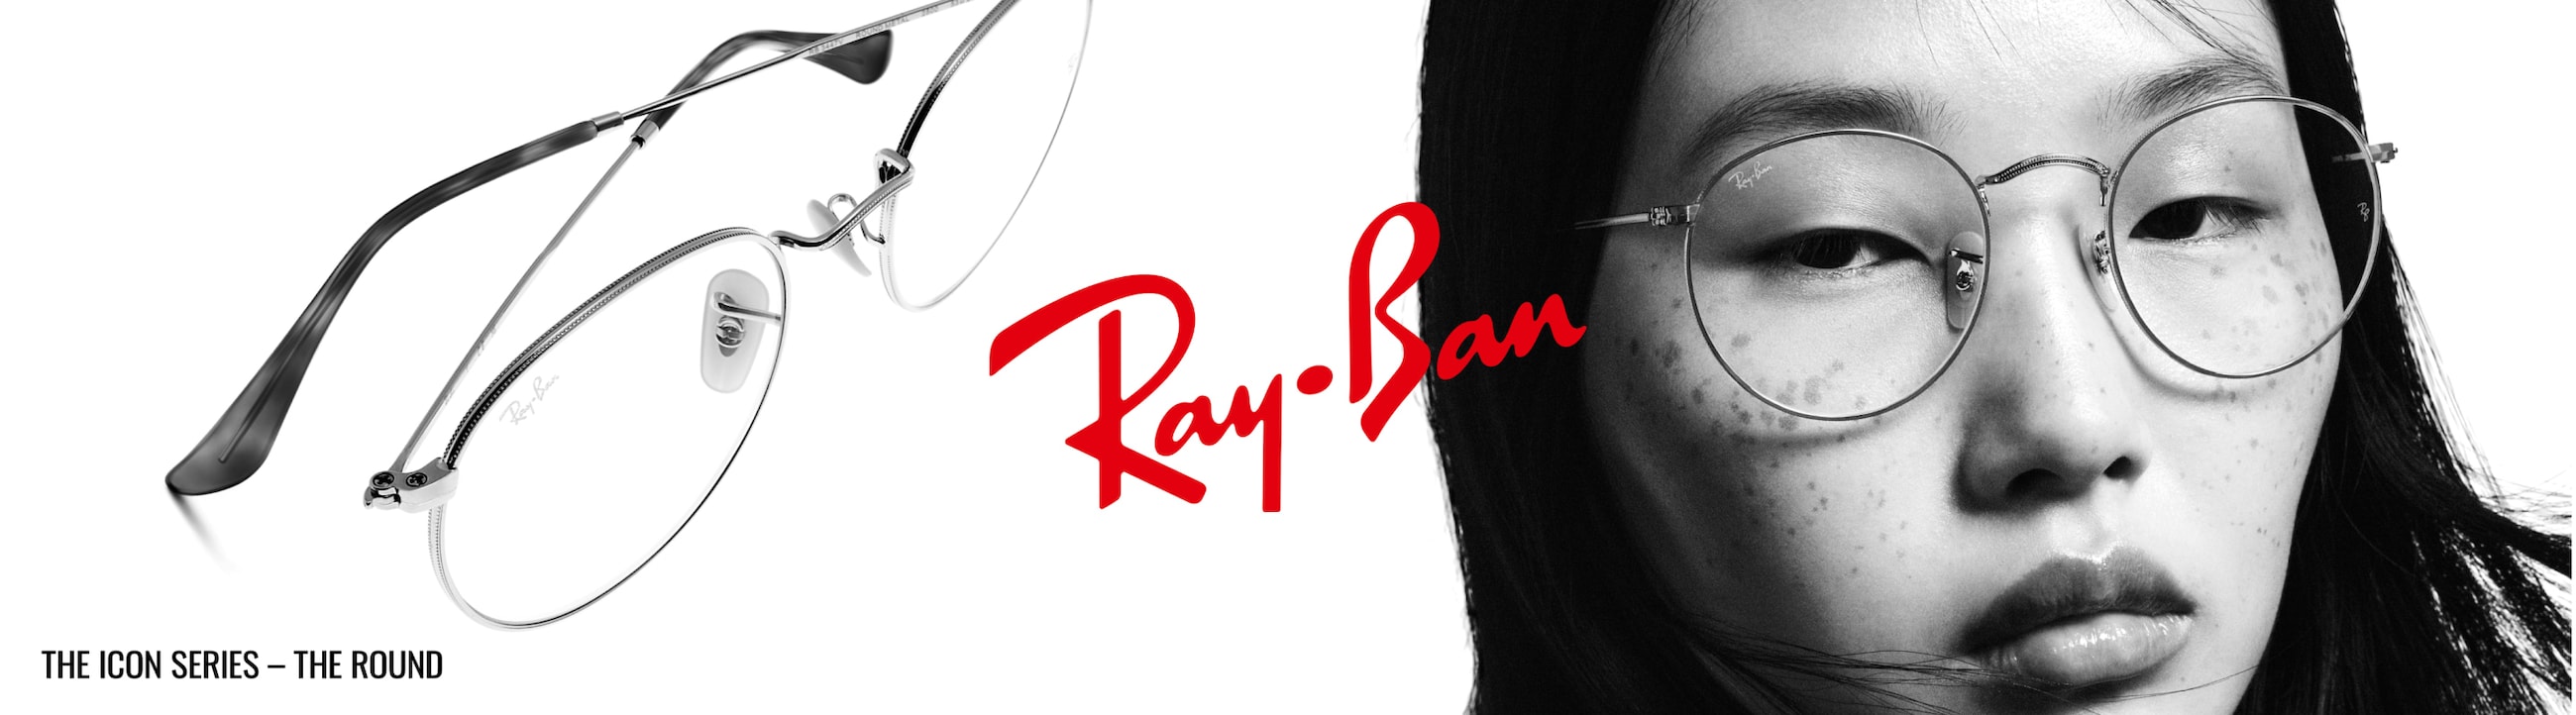 Ray-ban Campaign Hero Banner